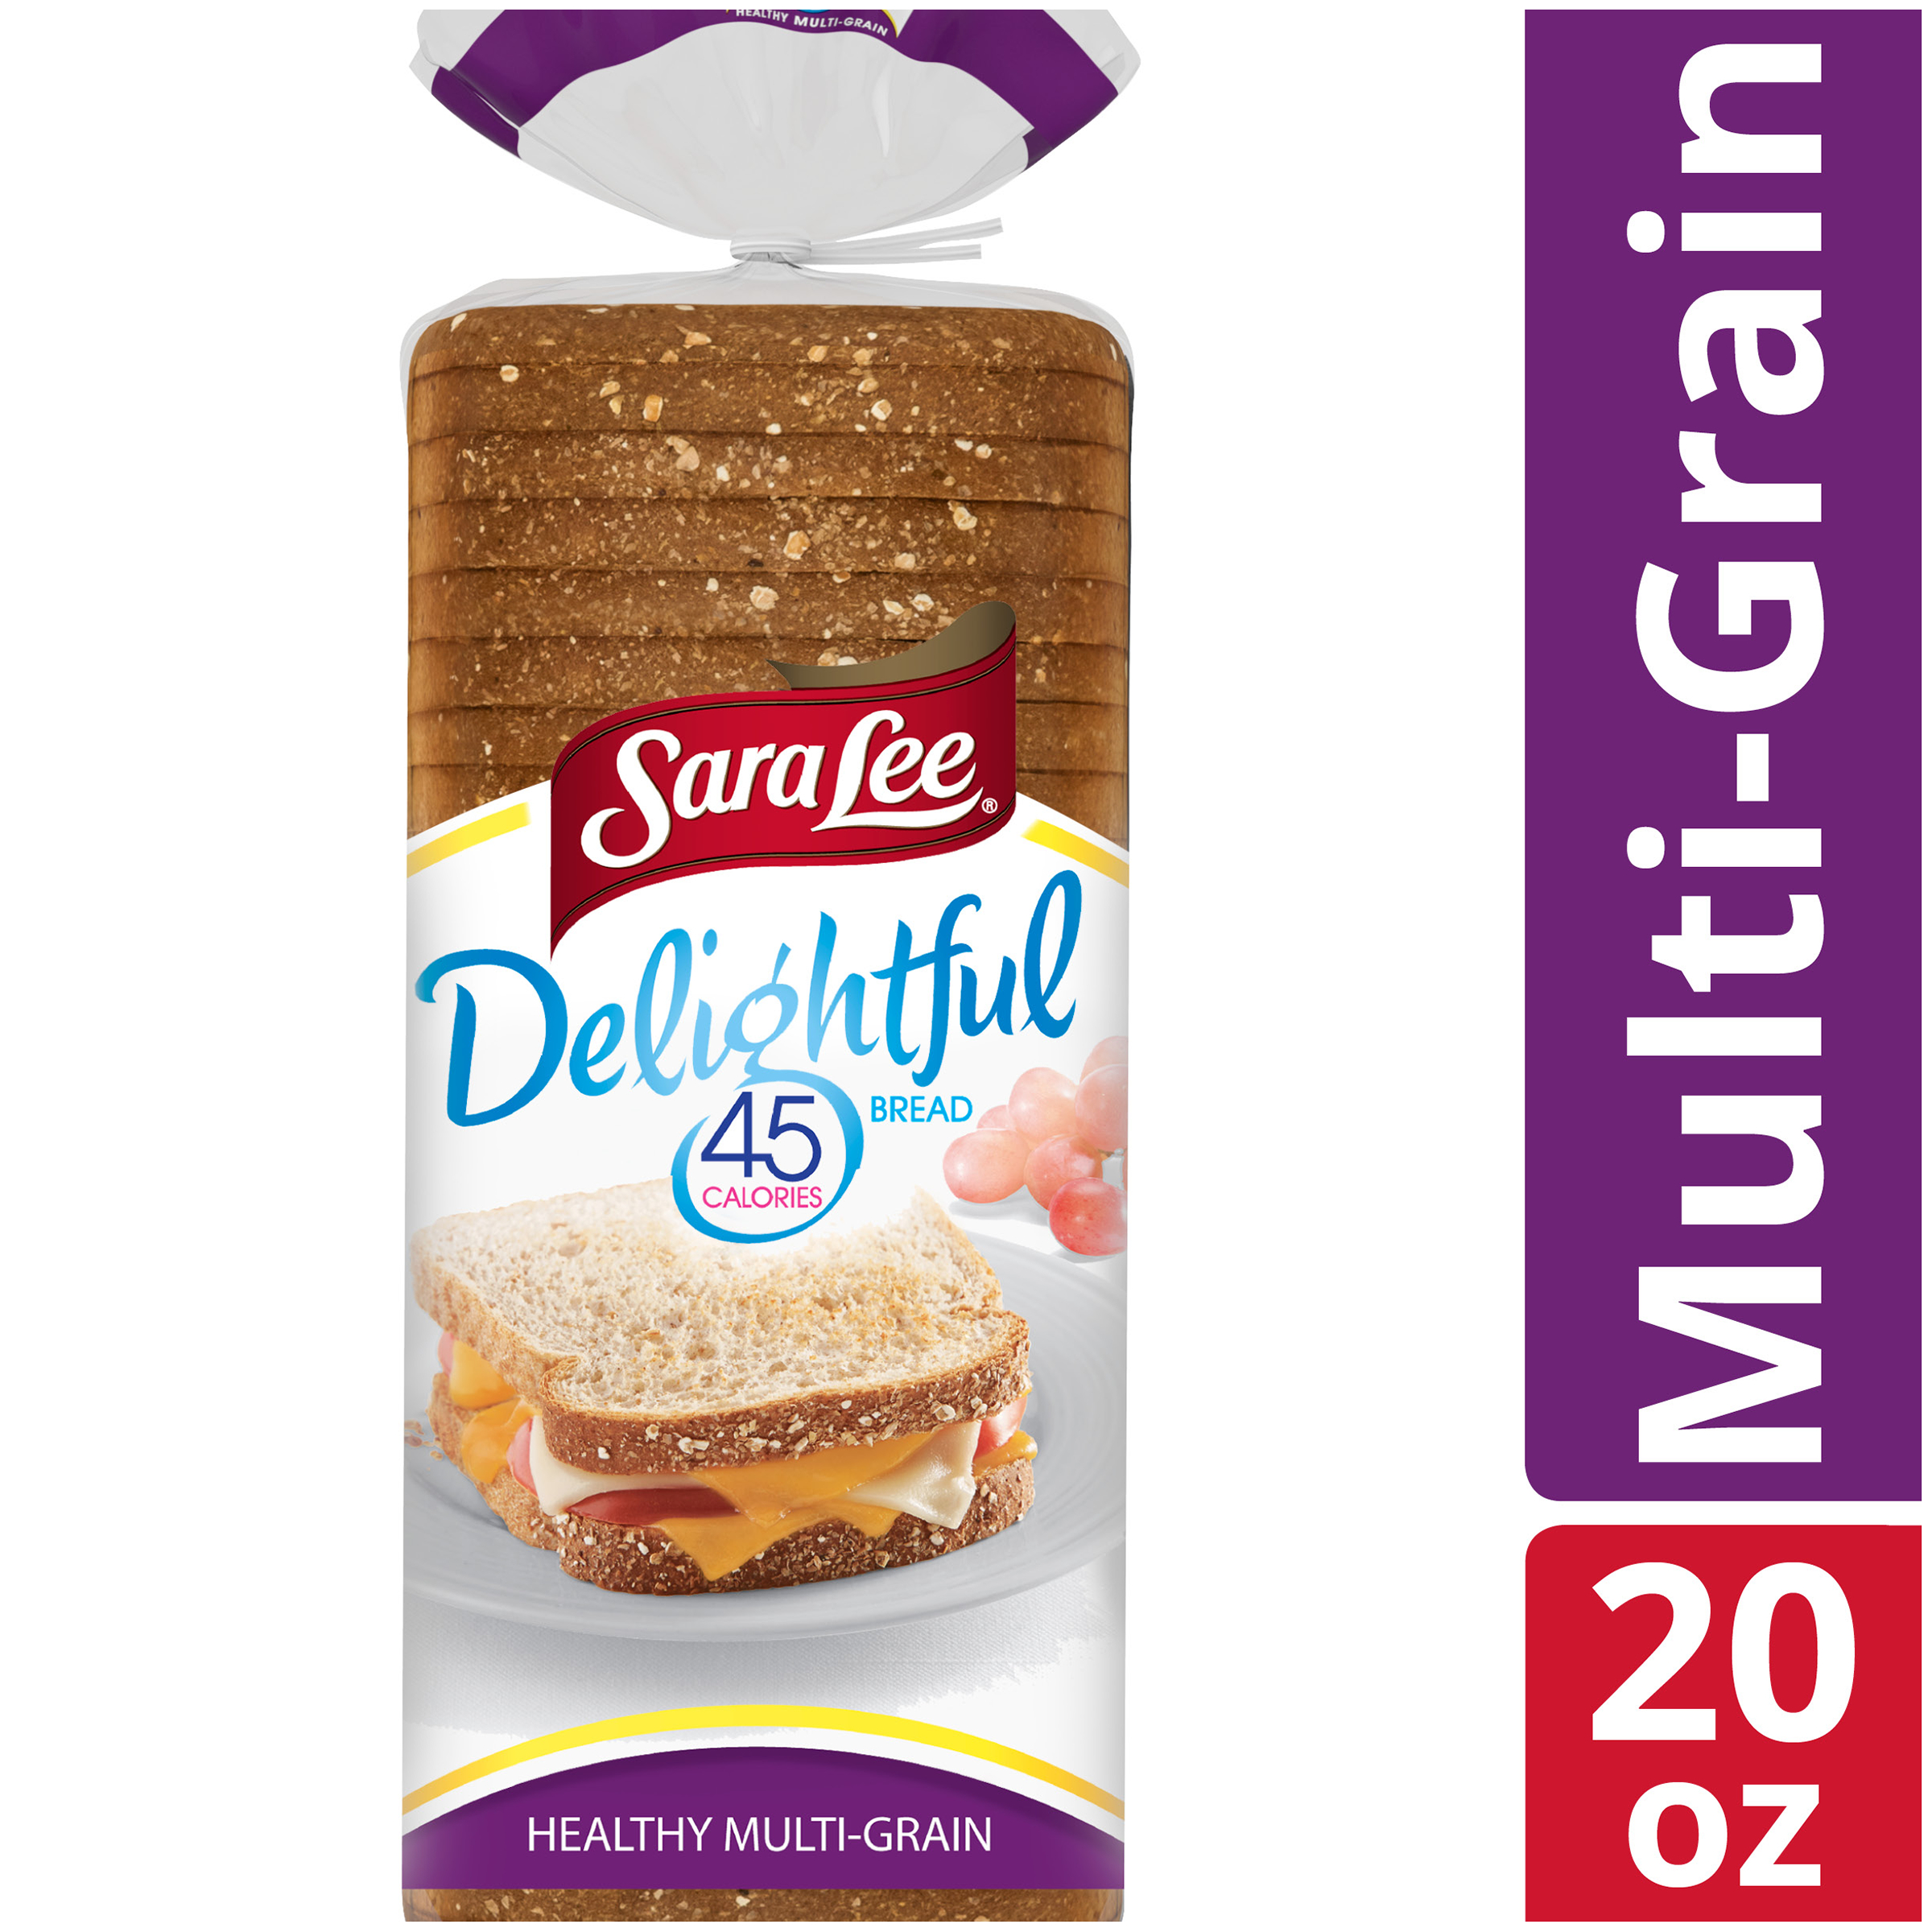 Sara Lee Delightful Healthy Multi-Grain Bread, 45 Calories per Slice, 1  Pound 4 Ounce Loaf – CrowdedLine Delivery